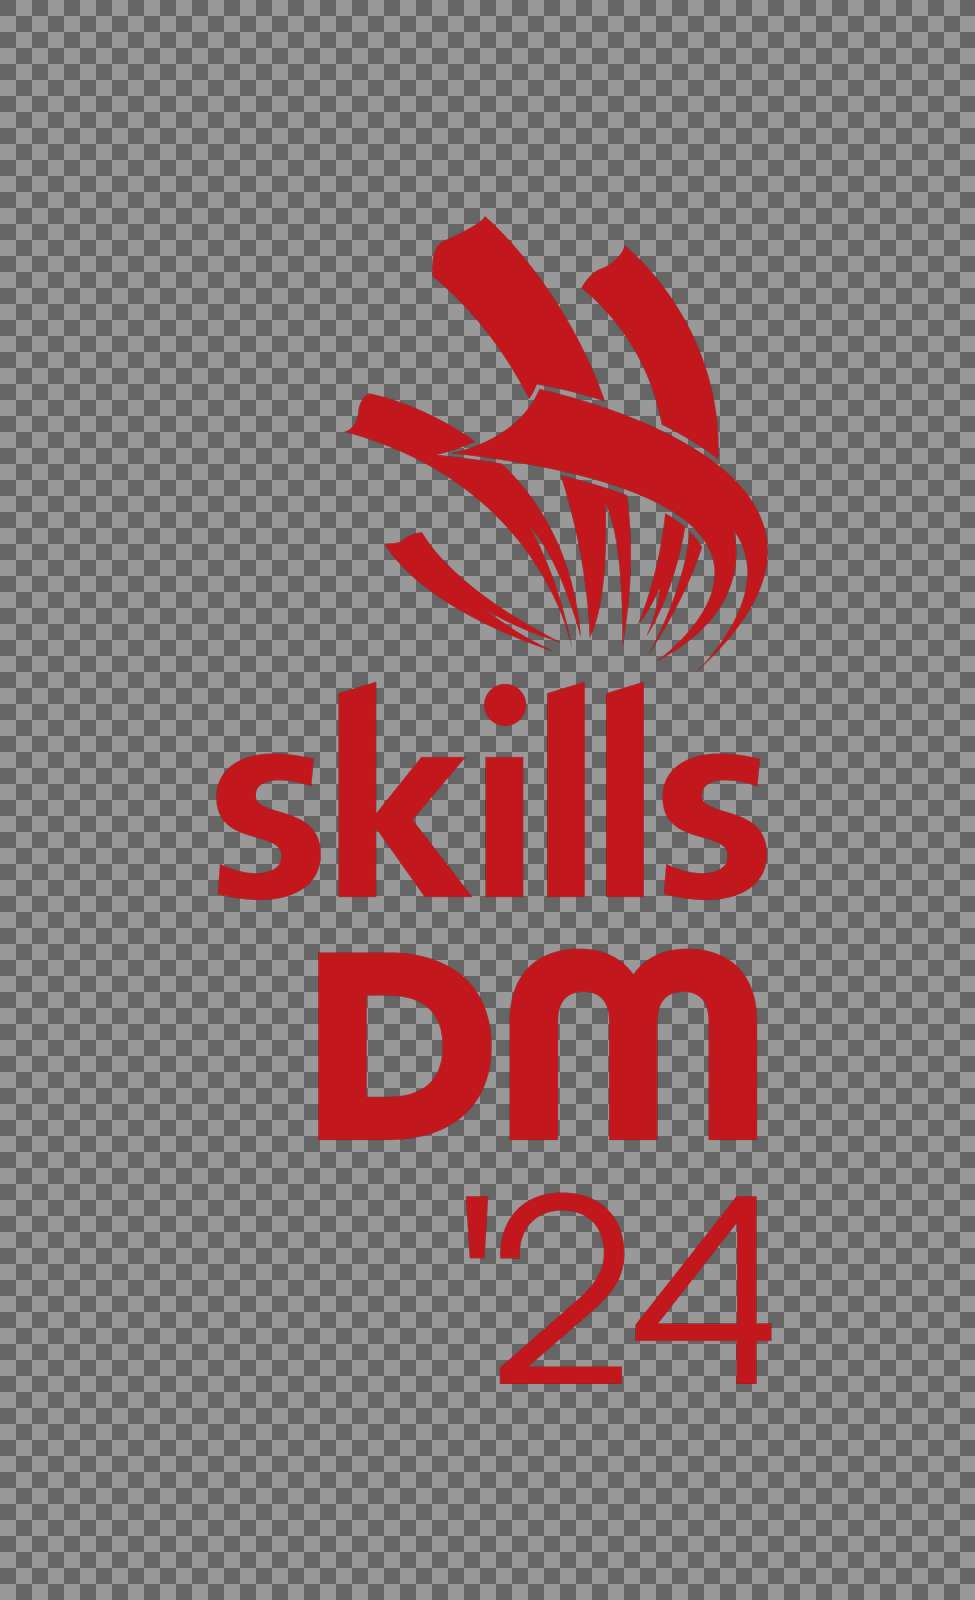 SkillsDM24   logo   RGB   Version 02   farve